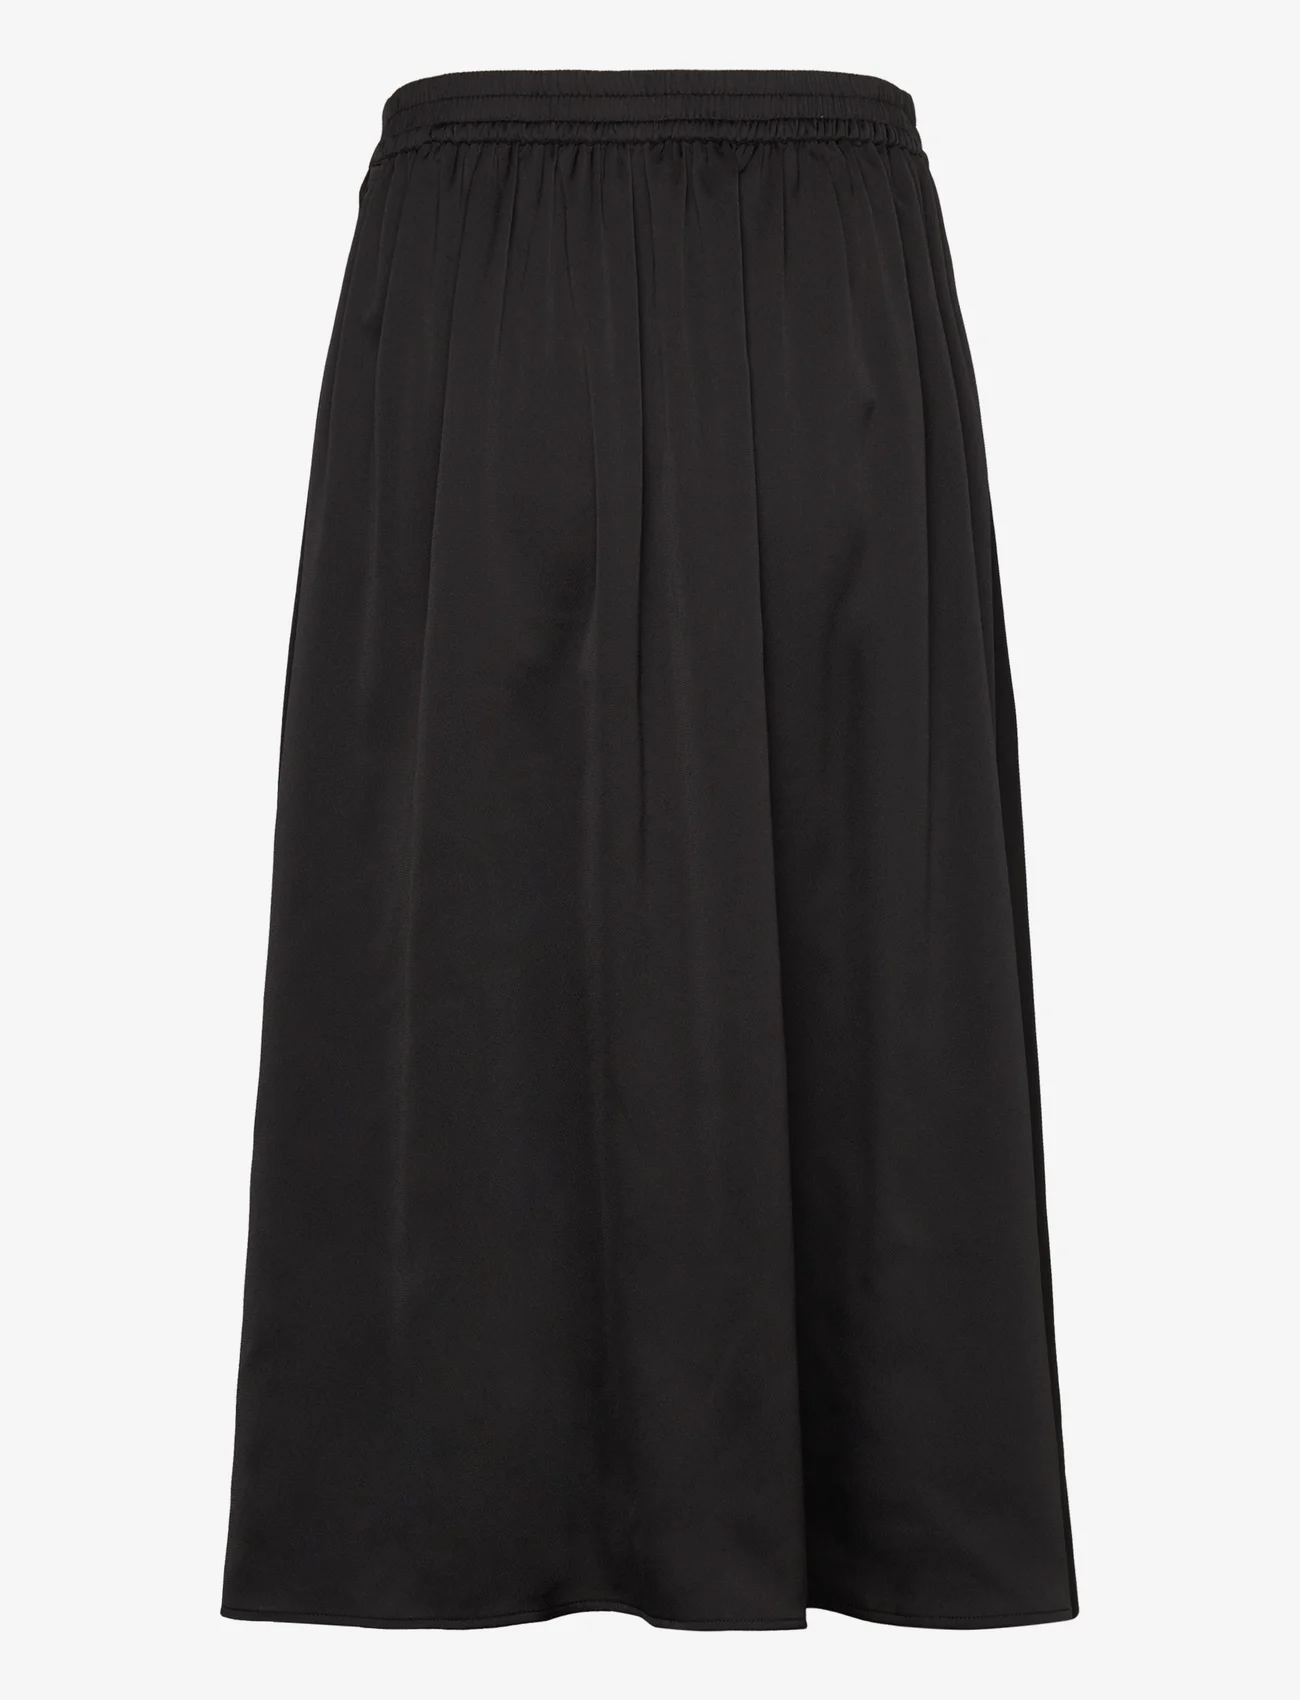 Bruuns Bazaar - AcaciaBBAmattas skirt - midi nederdele - black - 1